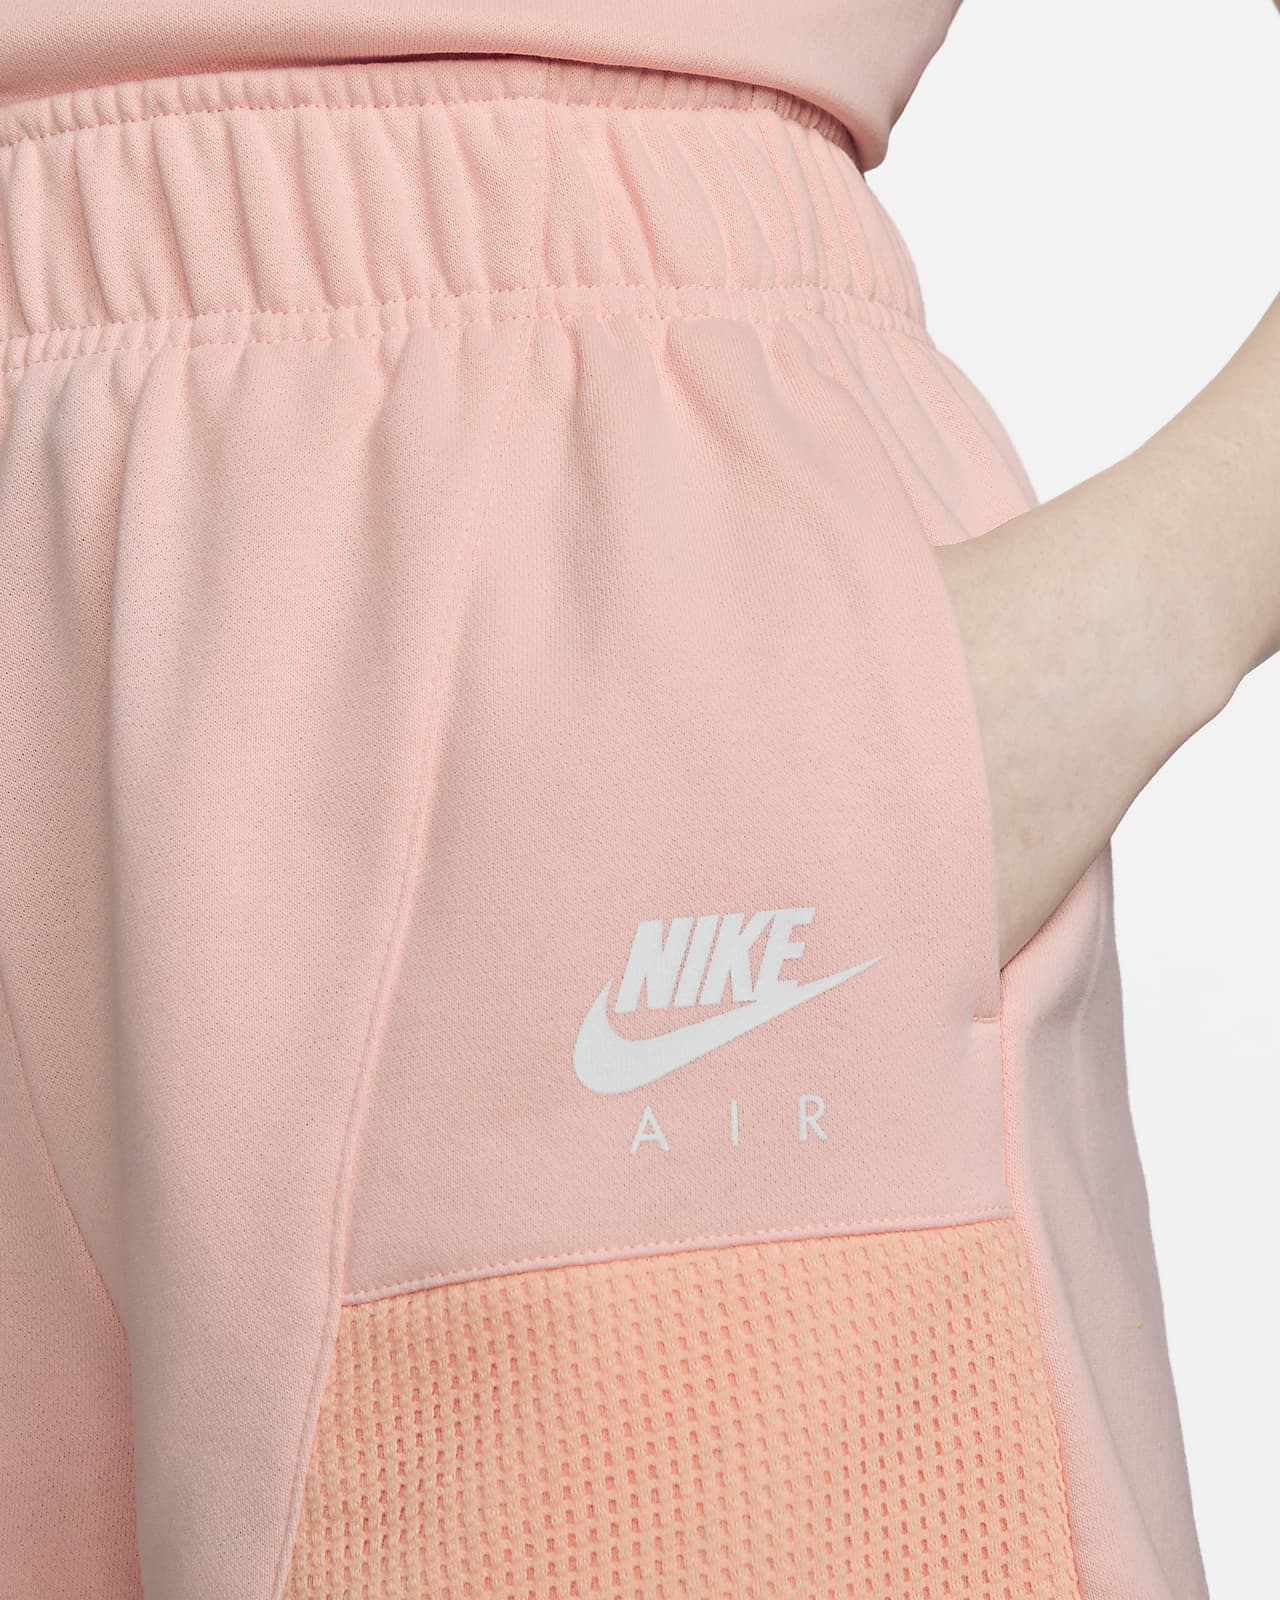 Nike Air Women's Fleece Shorts. Nike AT